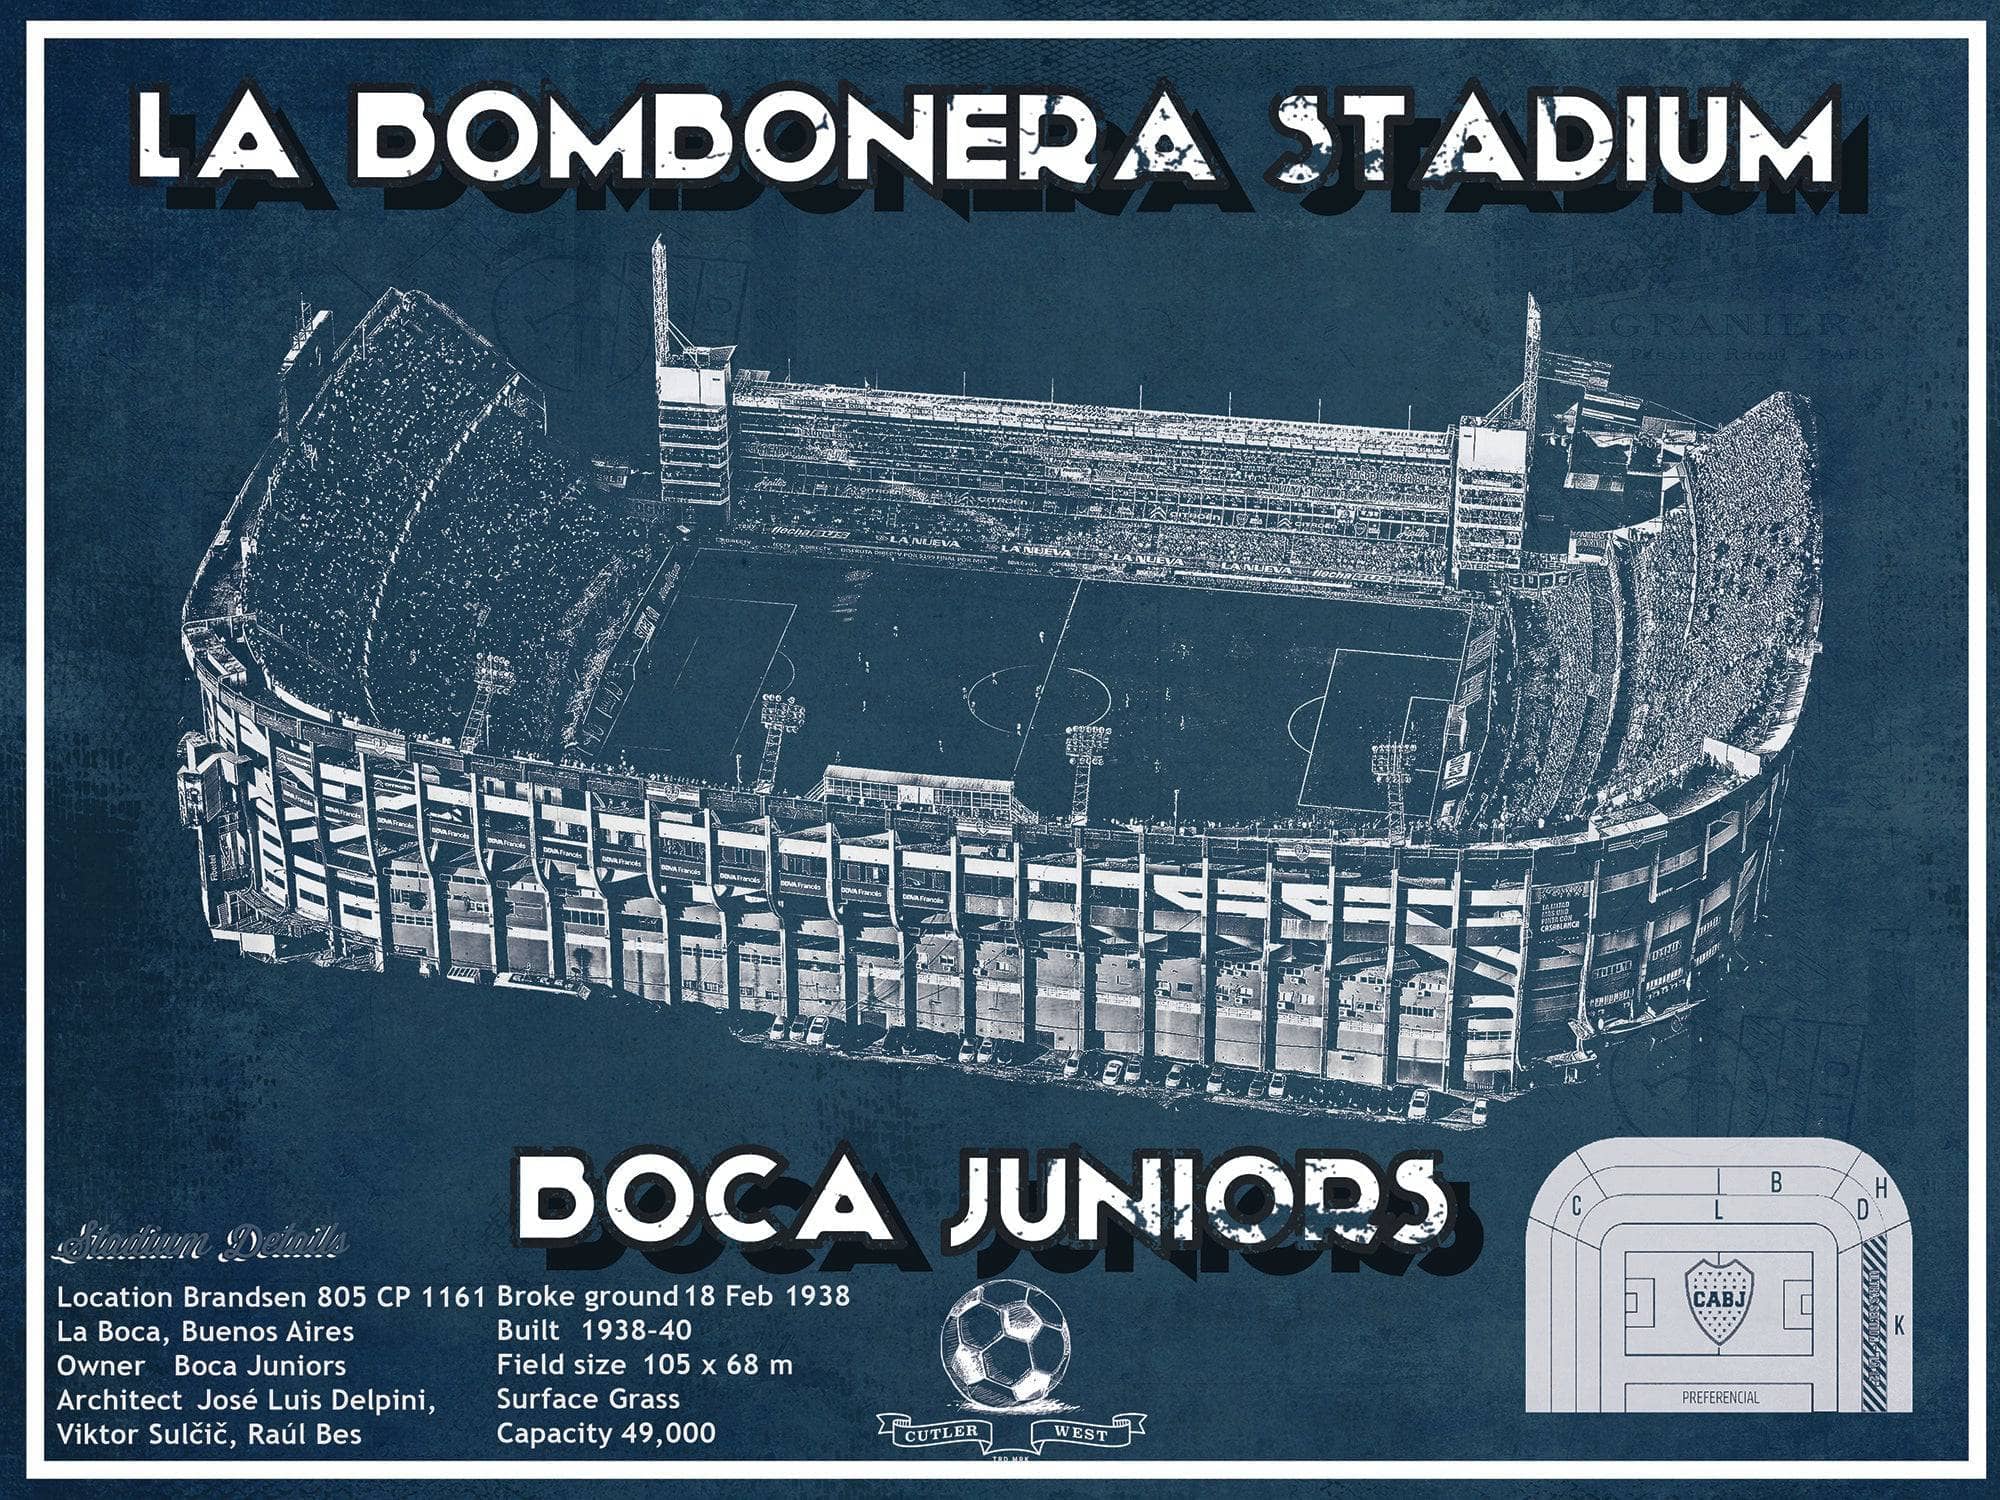 Cutler West Soccer Collection 14" x 11" / Unframed Boca Juniors F.C La Bombonera Stadium Soccer Print 2 734227953-TOP